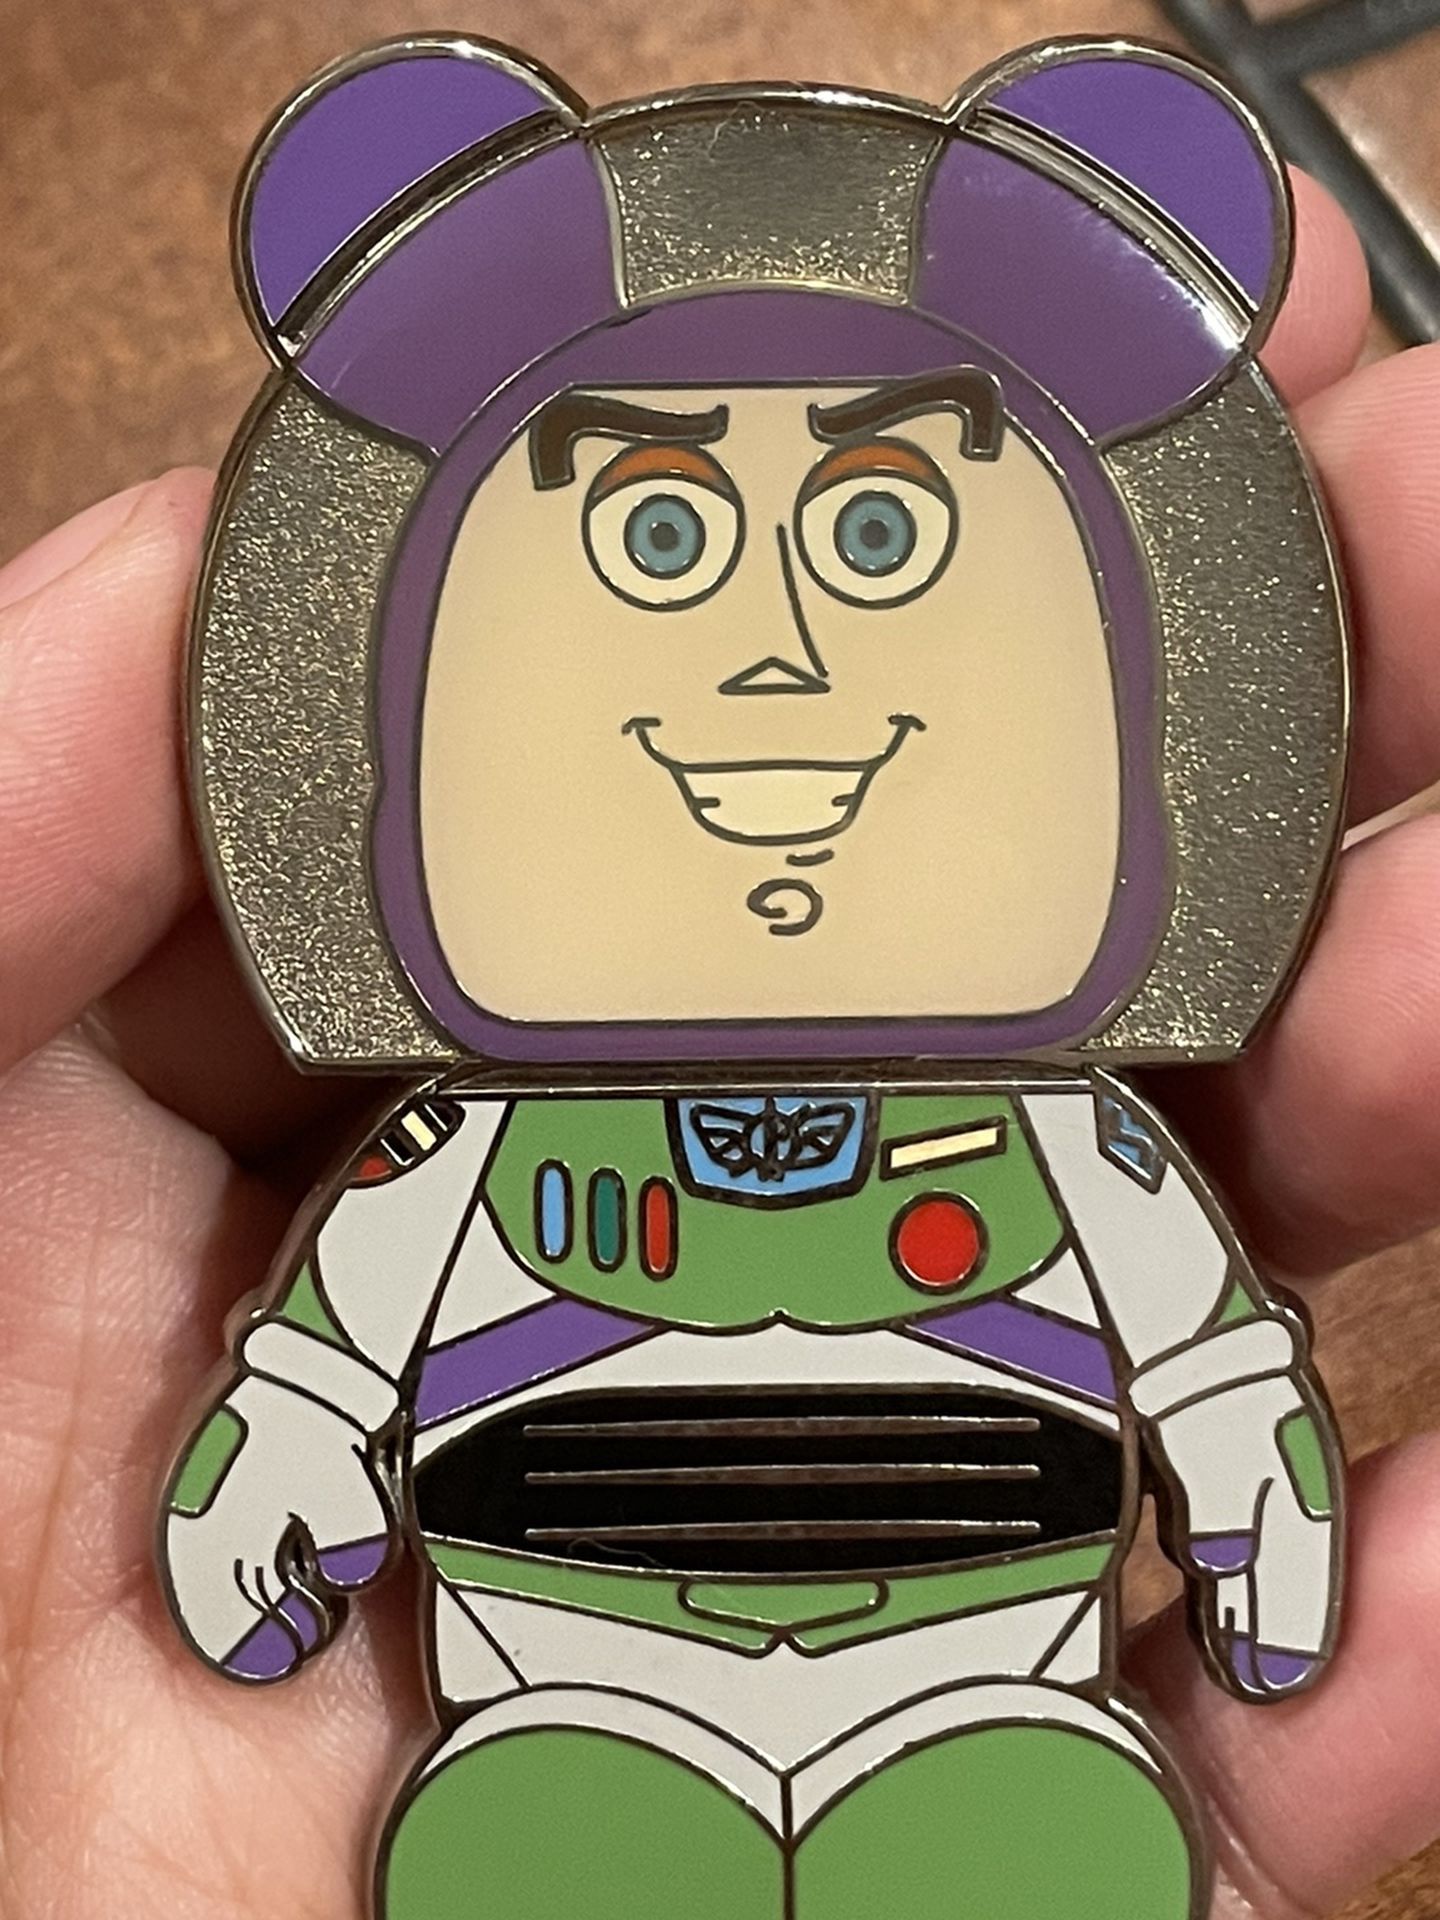 Buzz Lightyear (Toy Story) Vinylmation Pin